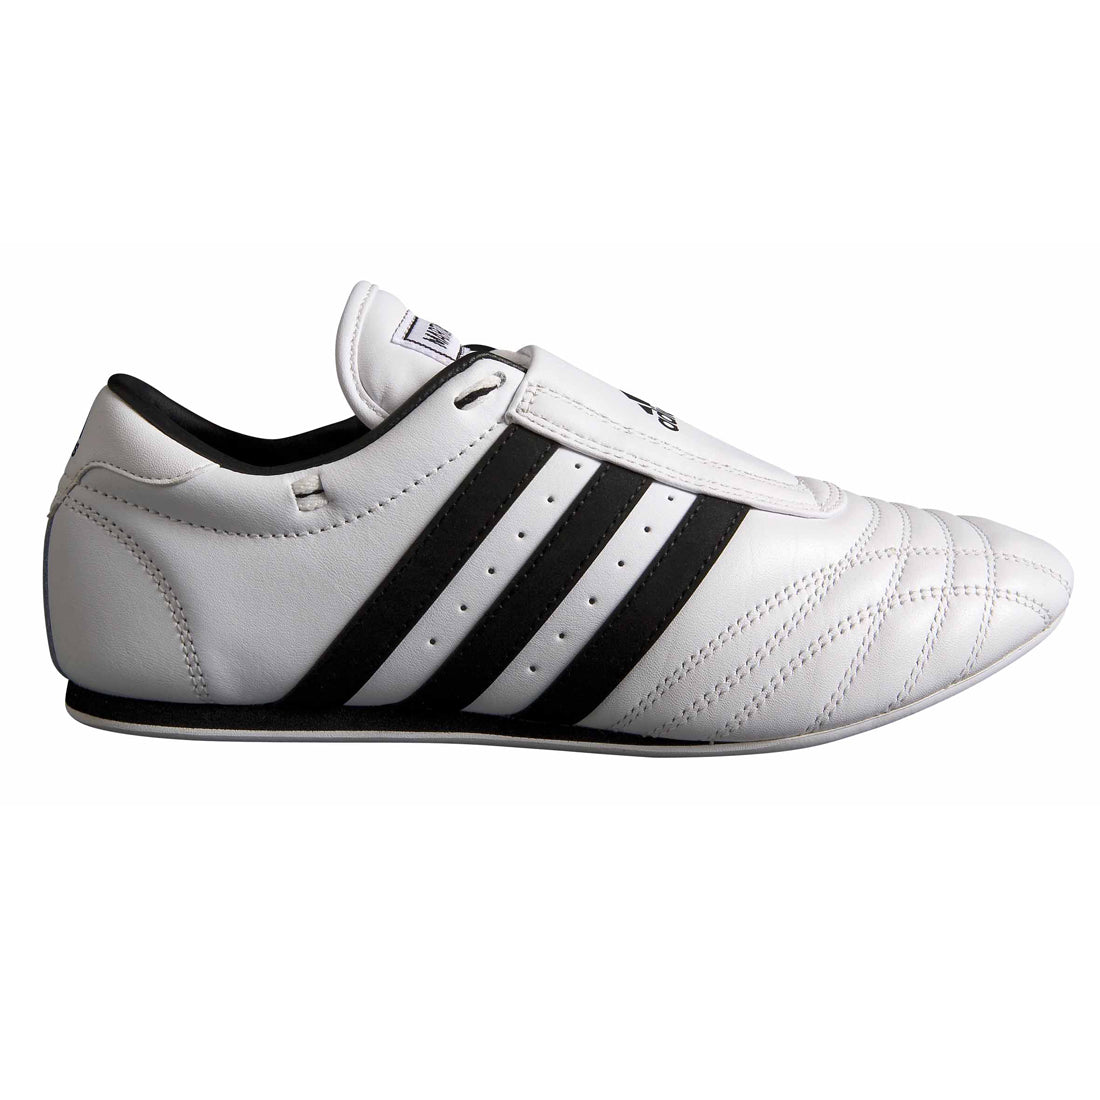 adidas Schuhe SM II - weiß, 831872